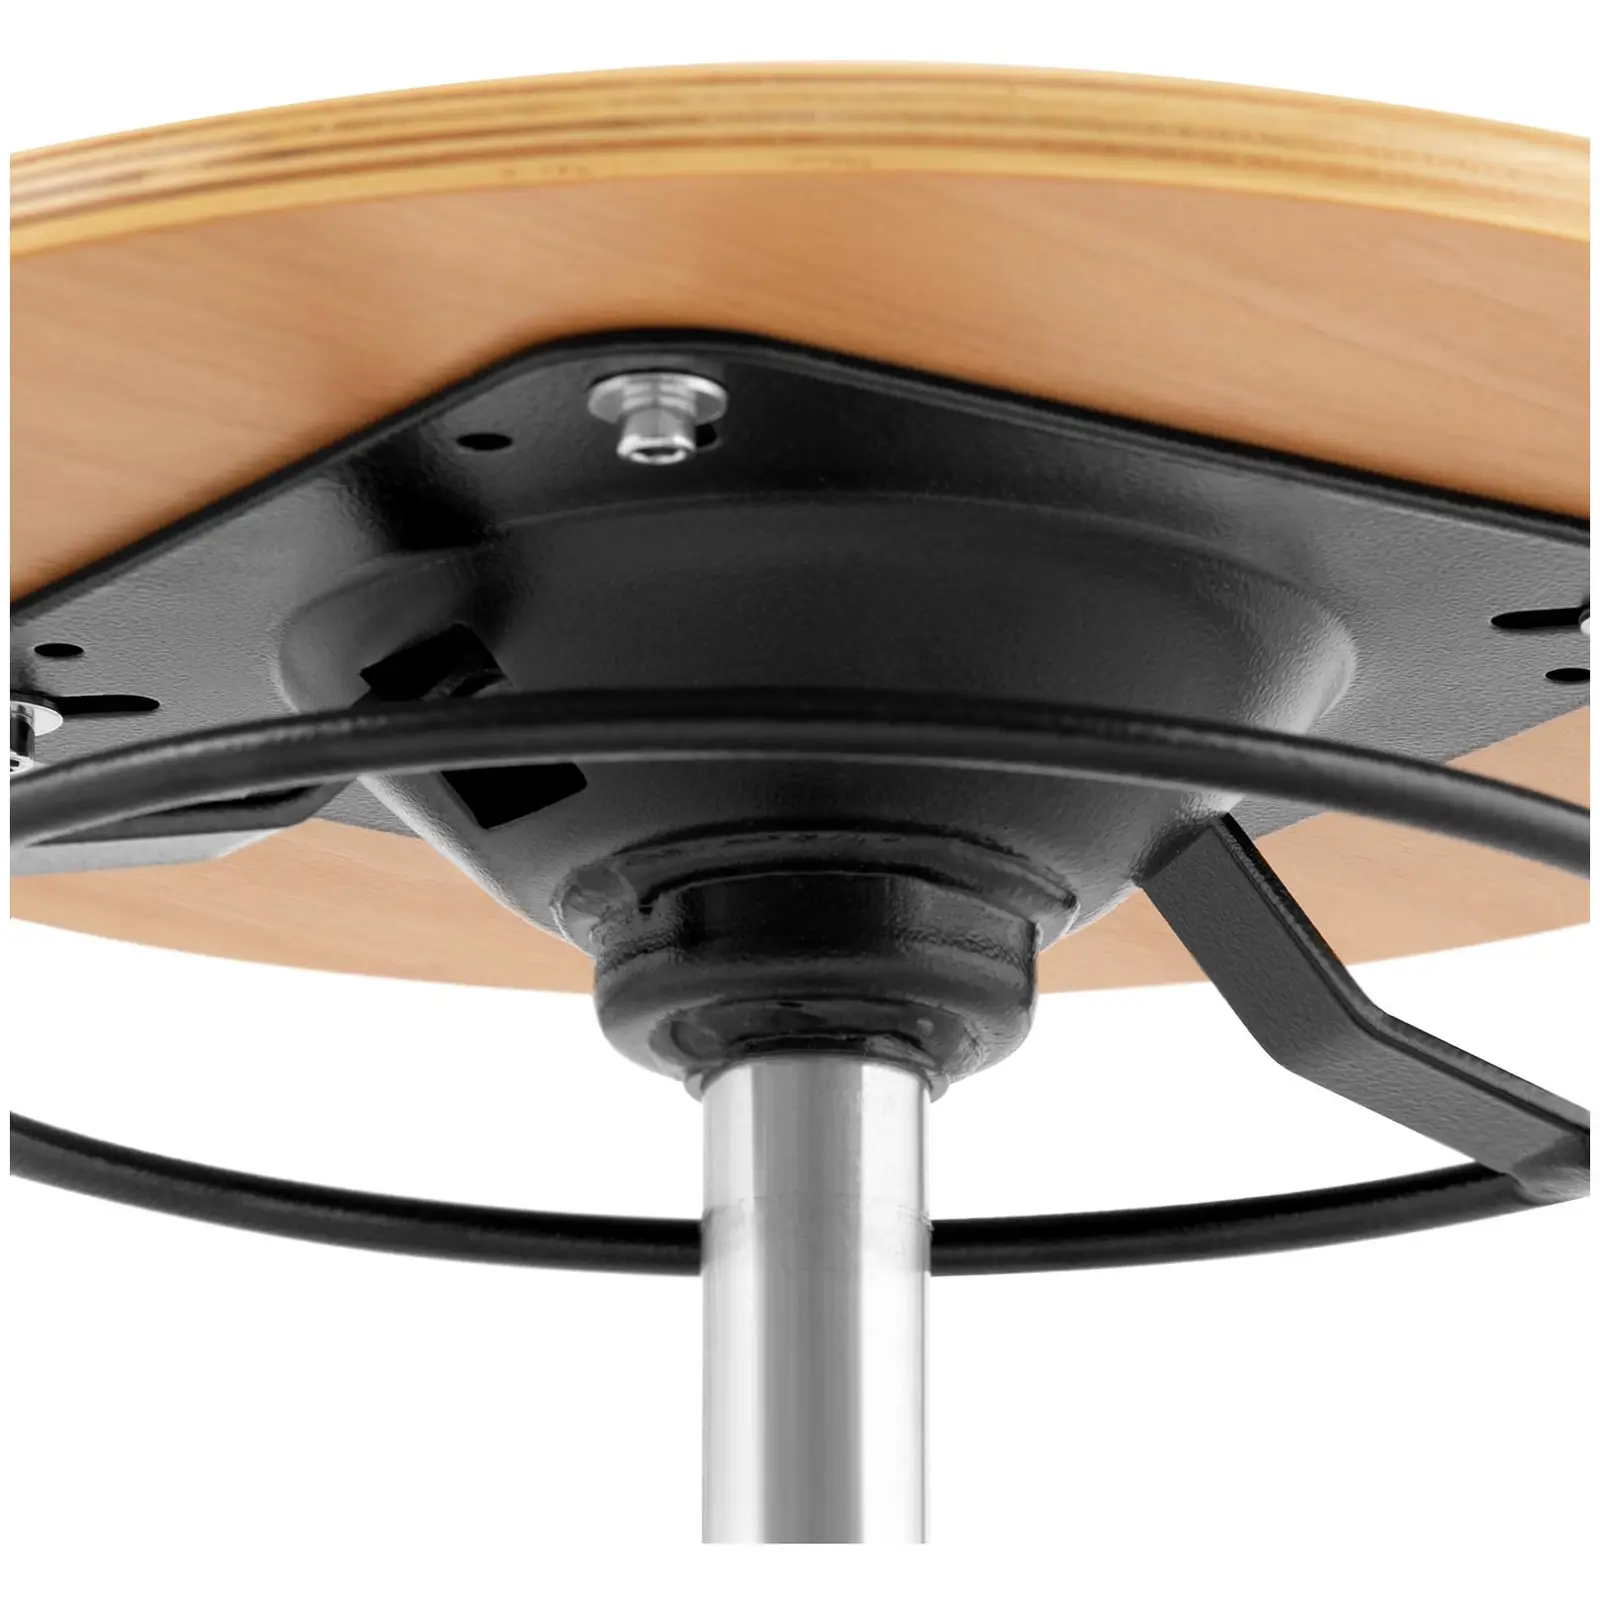 Workshop stool - 120 kg - Natural wood - height adjustable from 350 - 485 mm